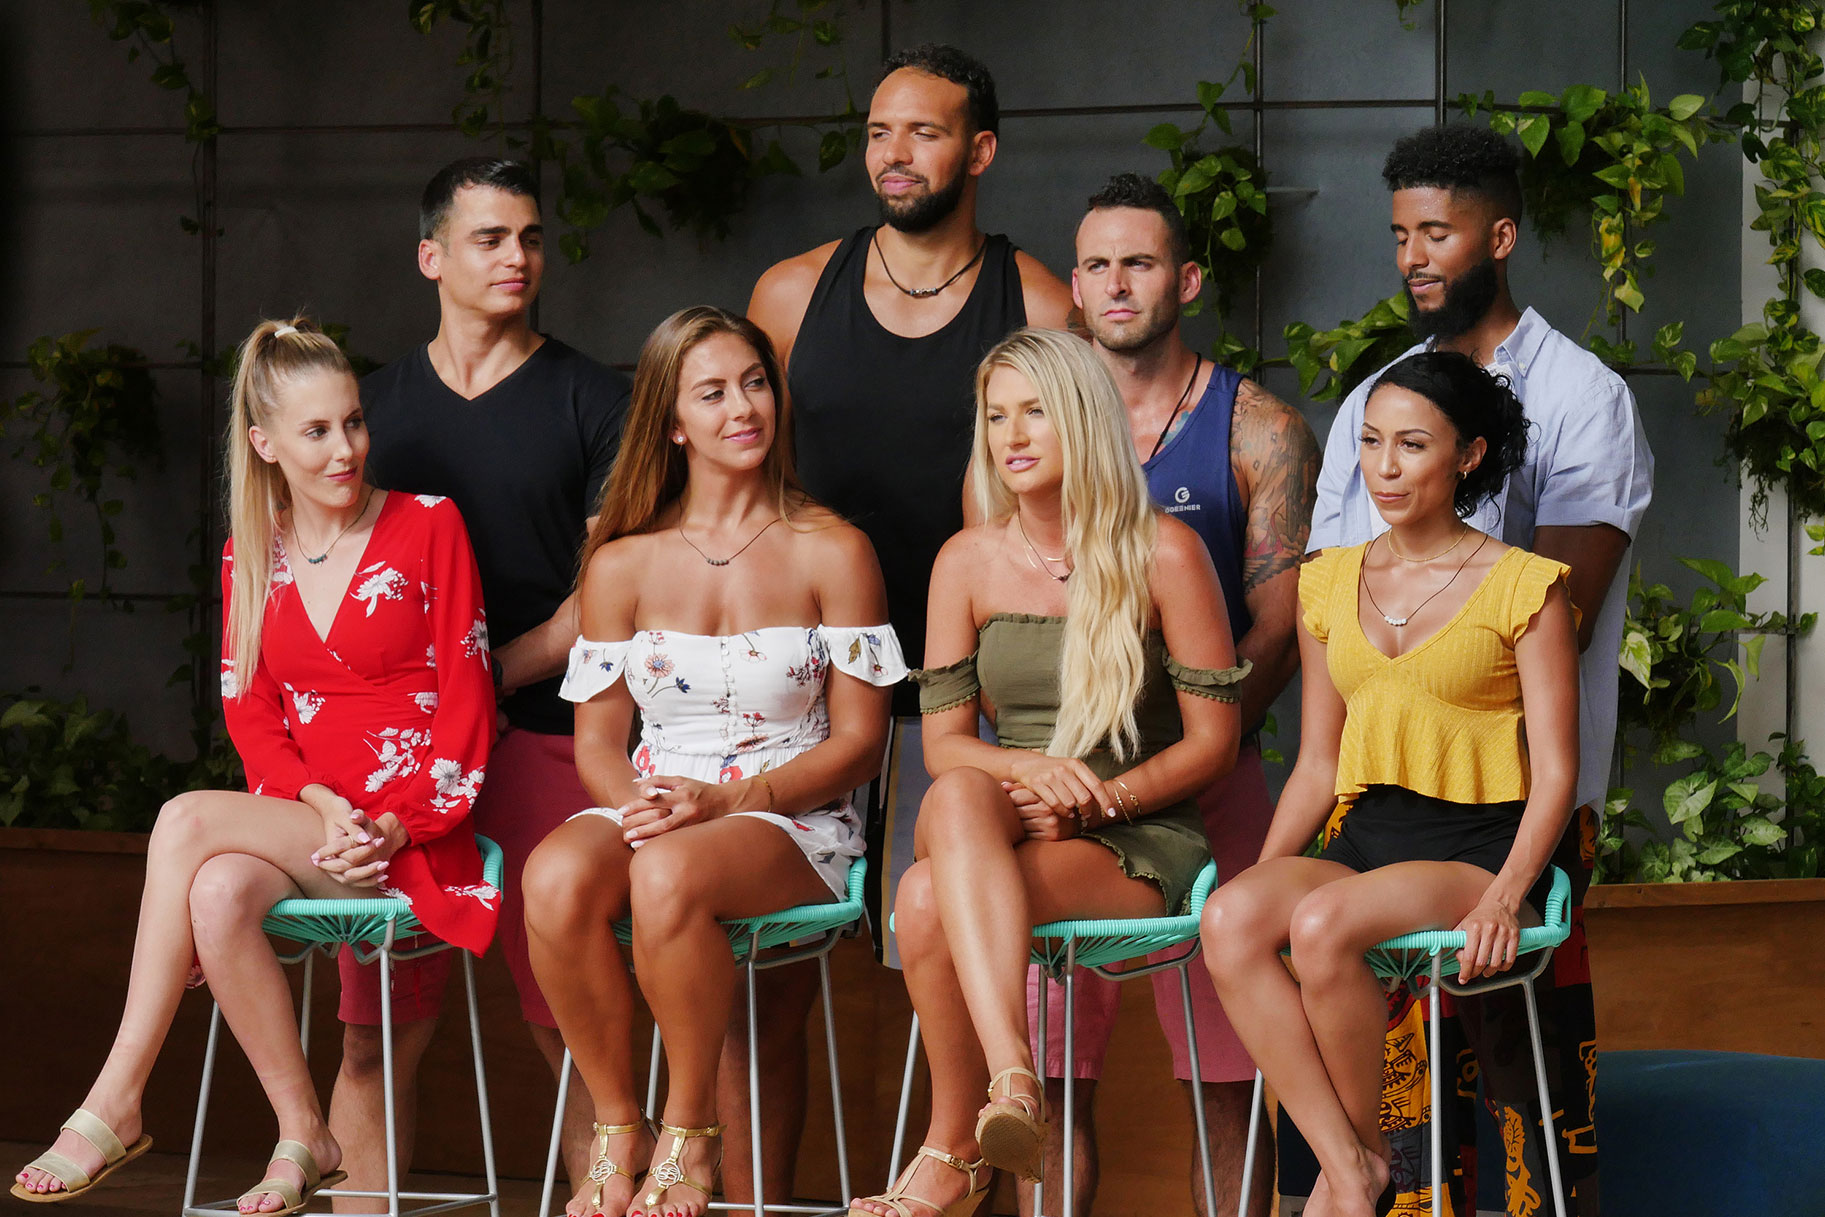 The 8 Original Temptation Island contestants sitting together